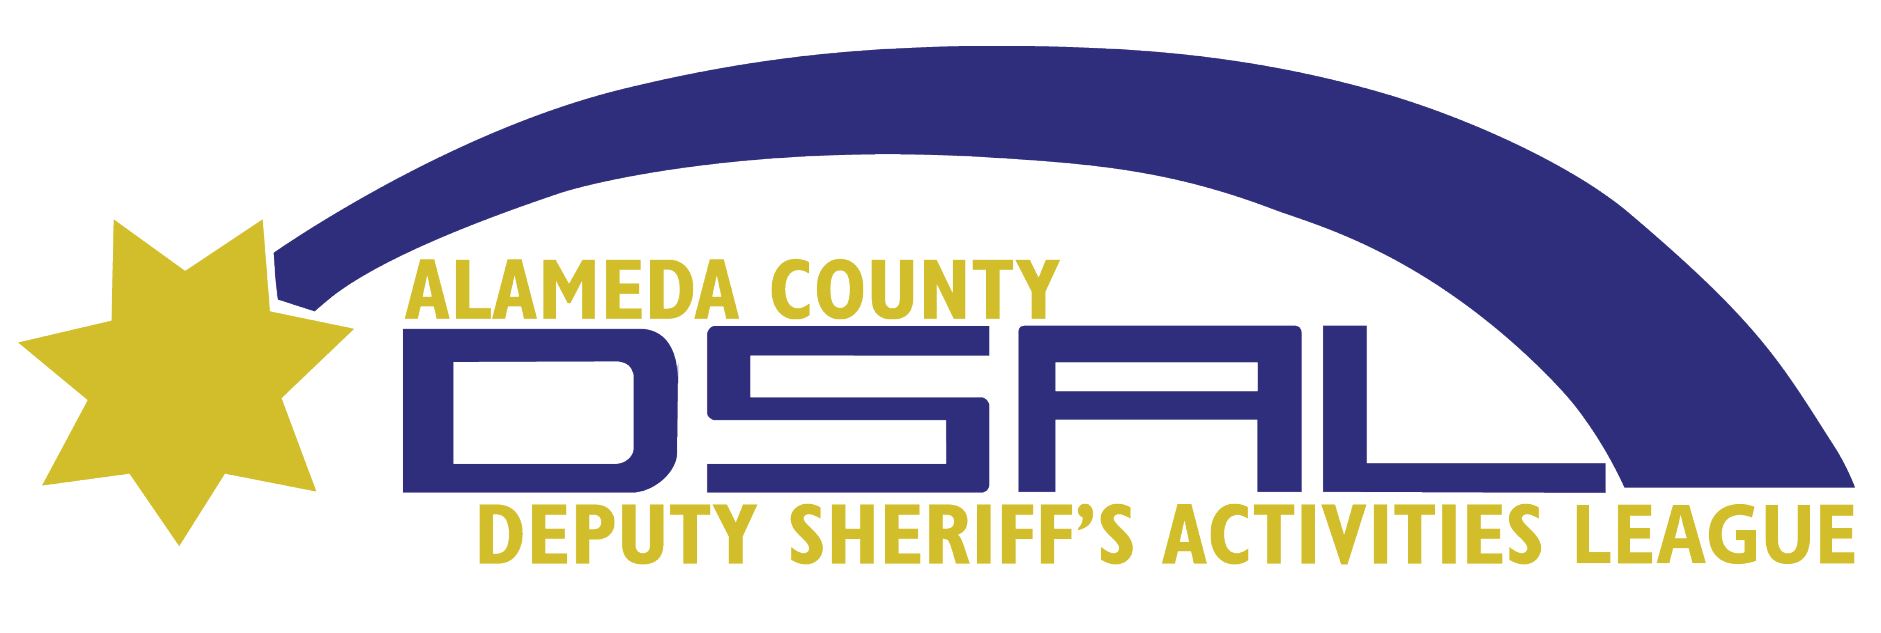 Alameda County Deputy Sheriffs' Activities League logo